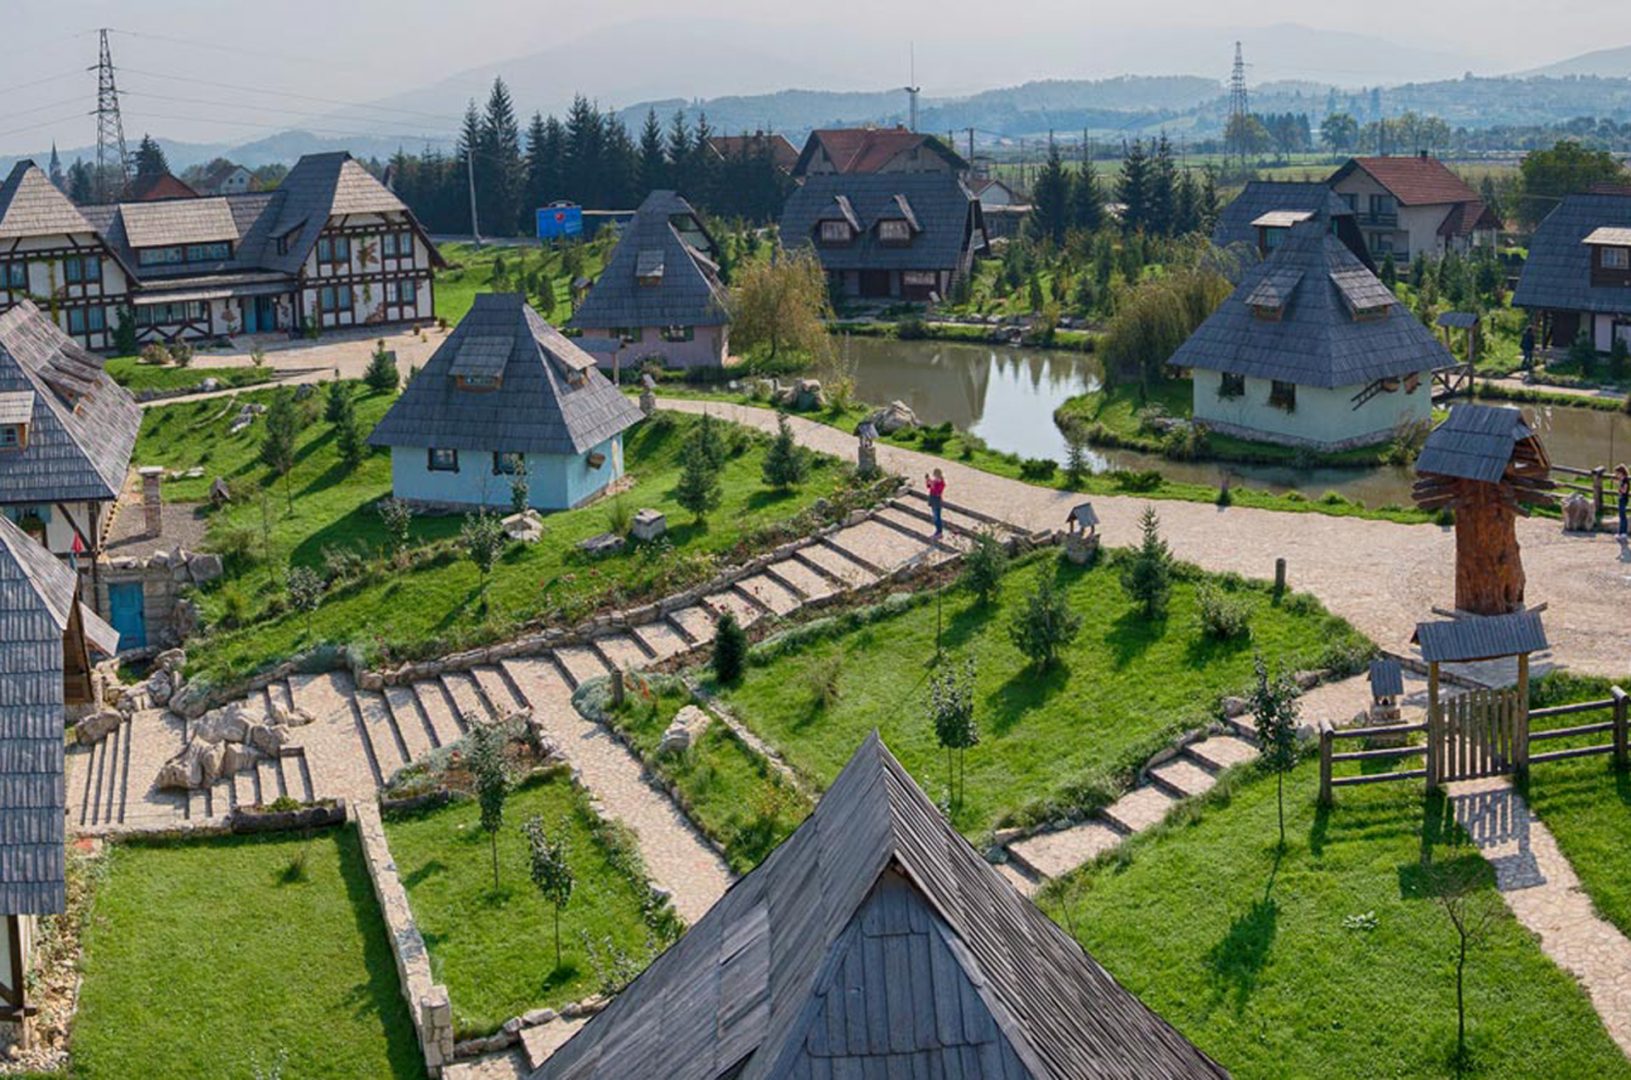 etno-village-ardaci-heaven-in-bosnia